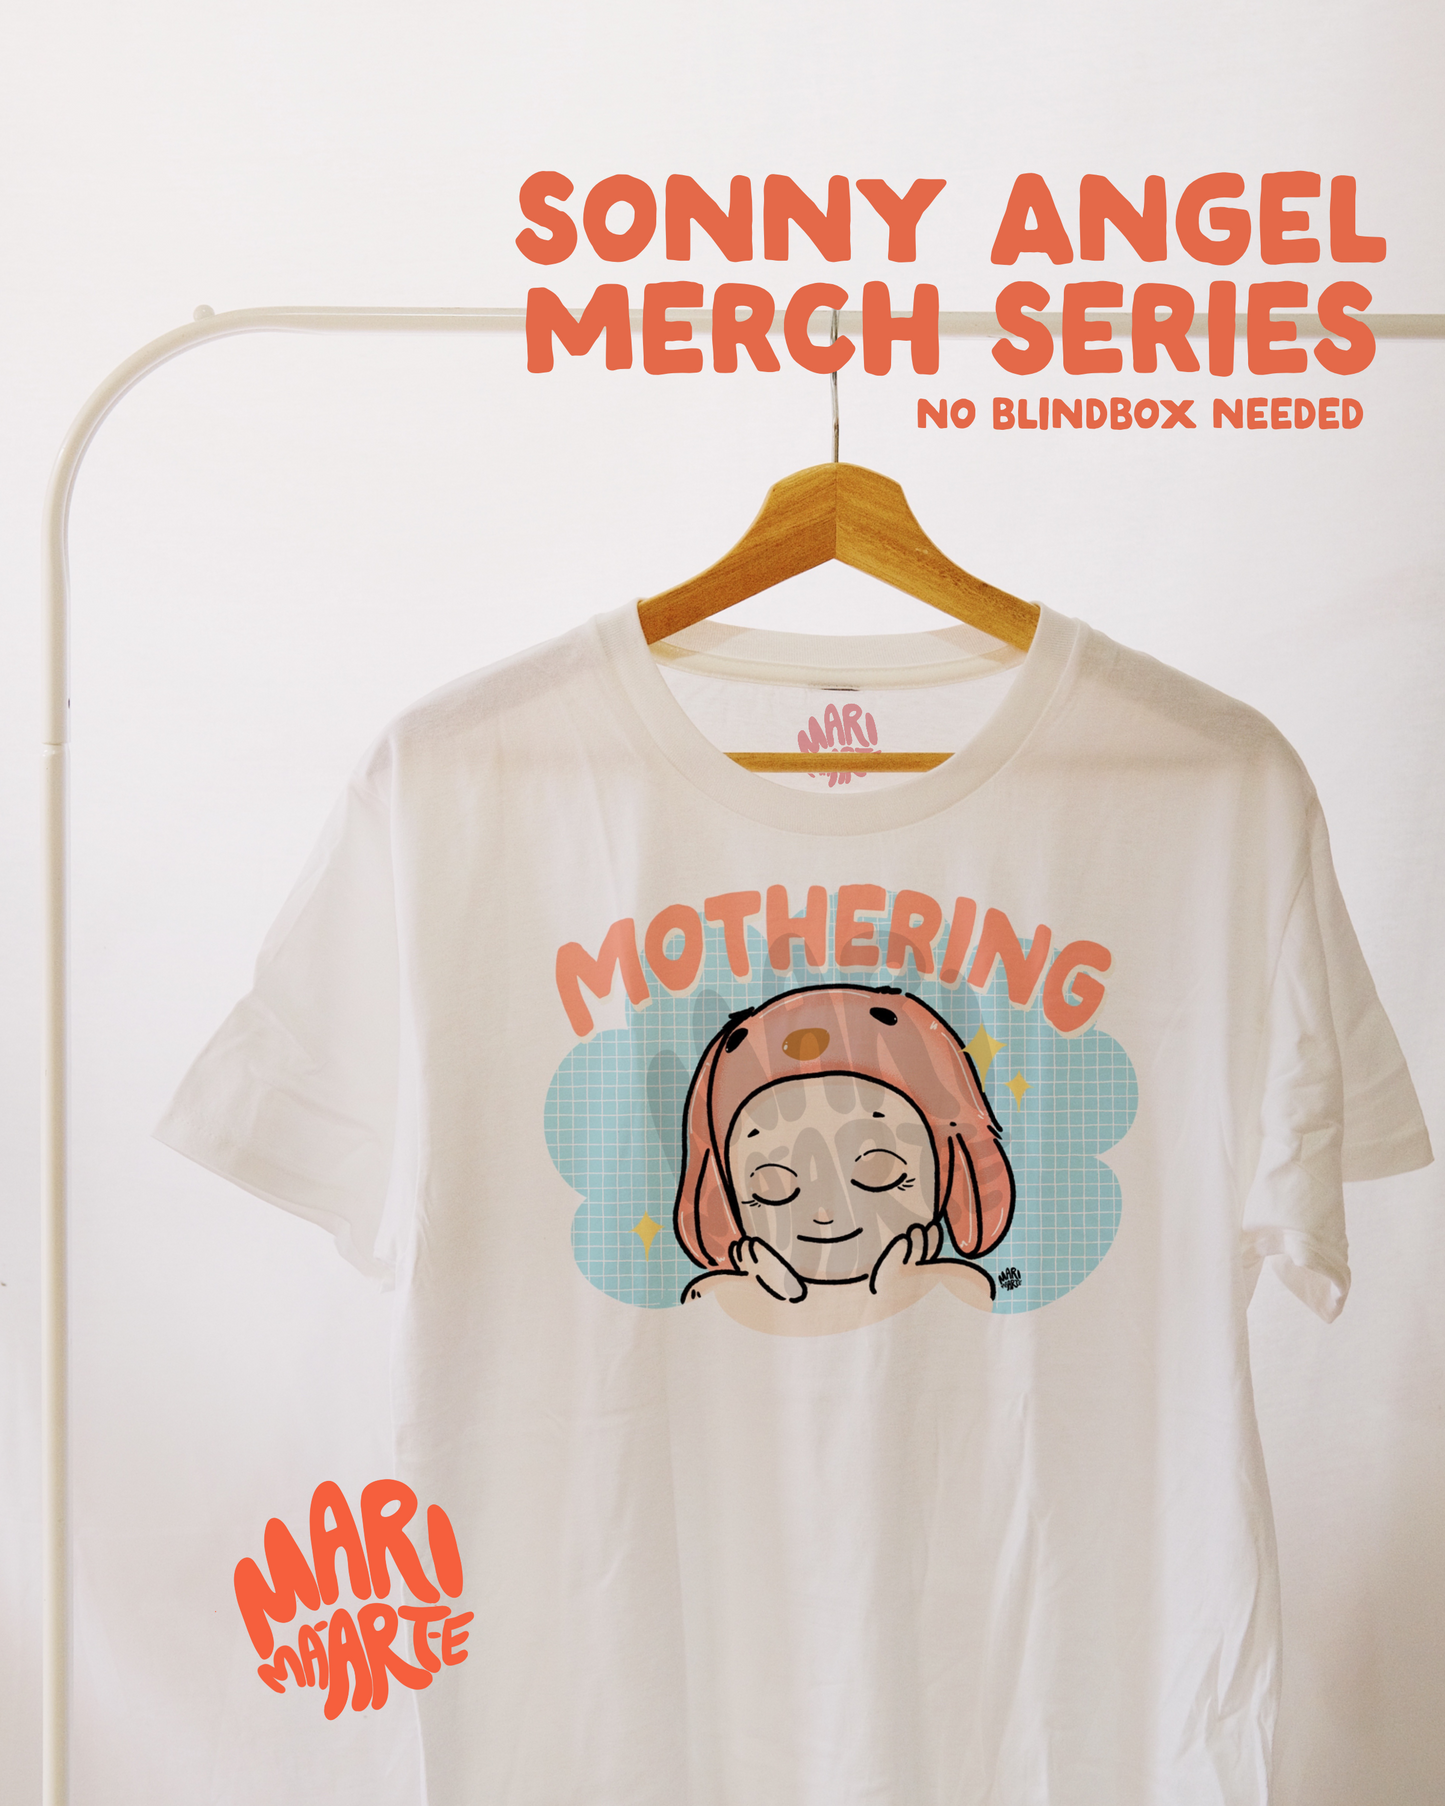 SONNY ANGEL MOTHERING SHIRT